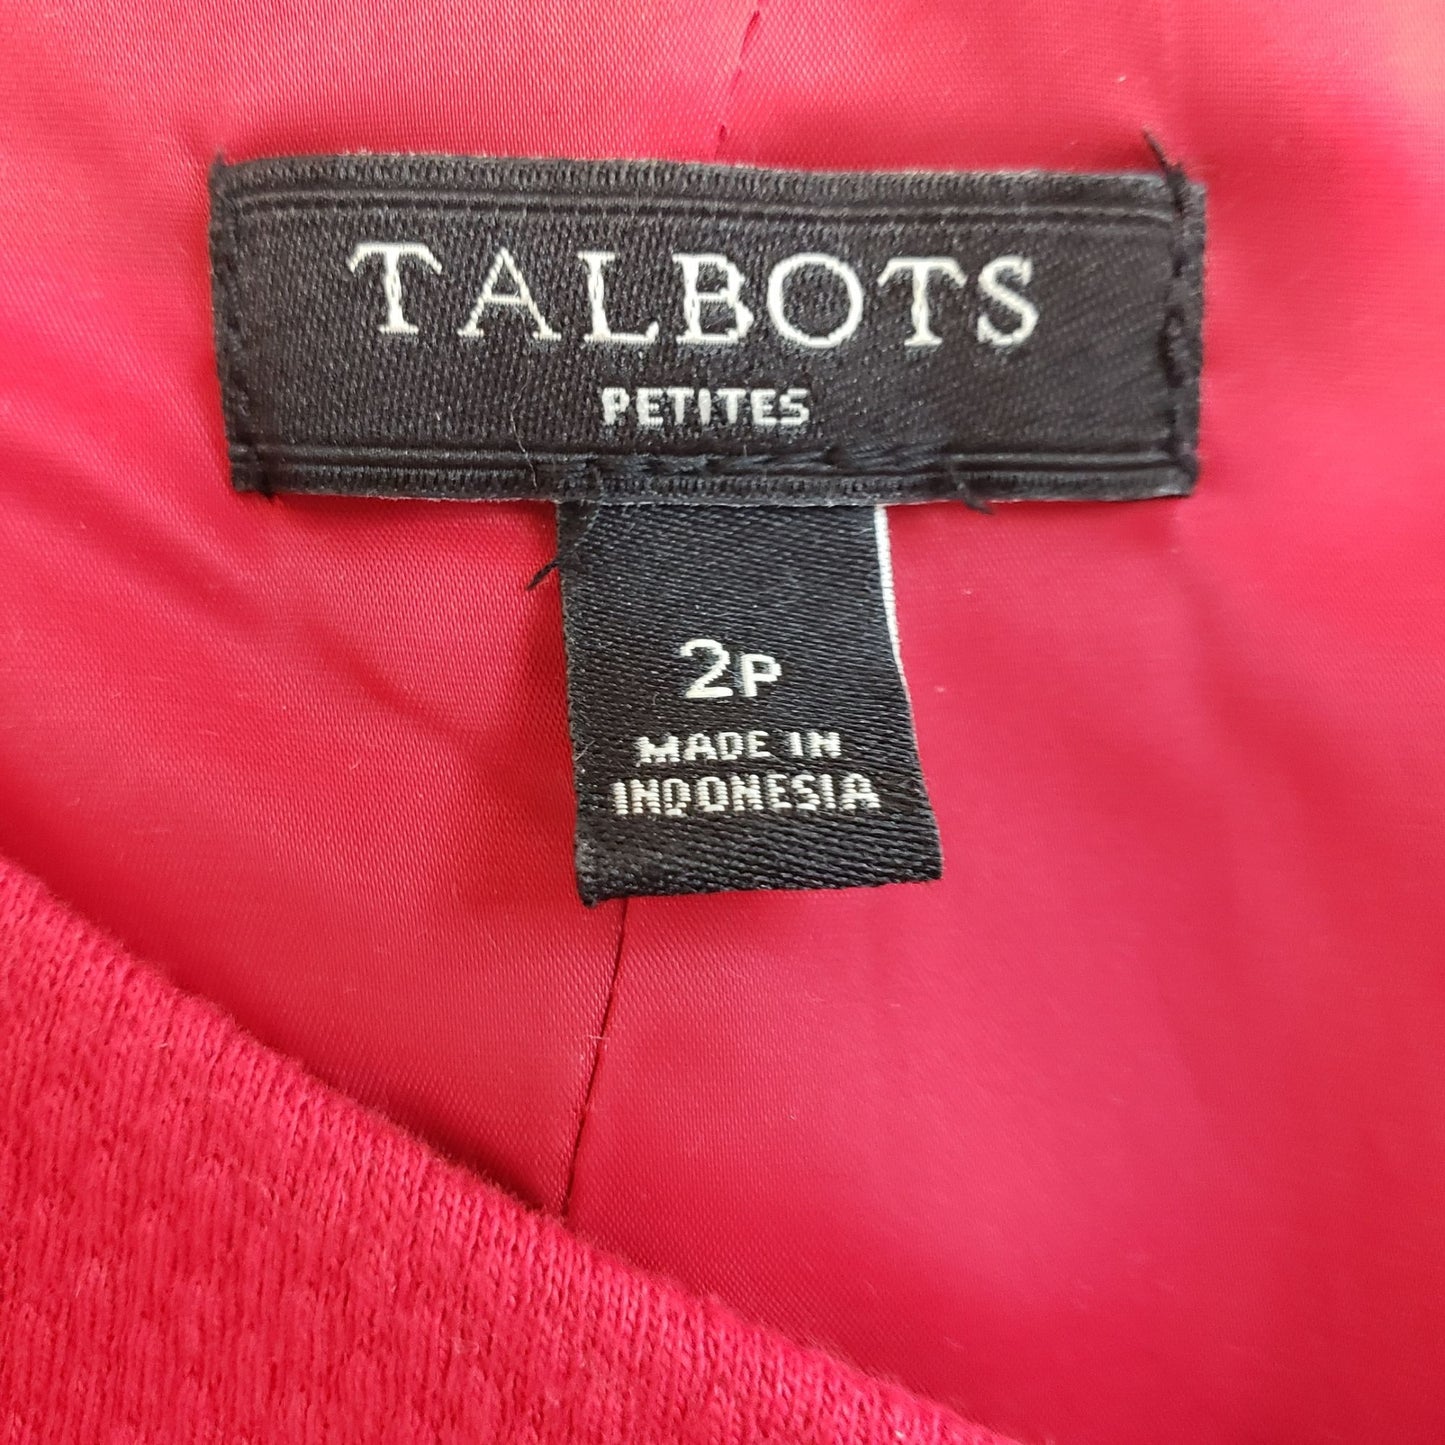 Talbots Red Textured Sheath Dress Size 2 Petite